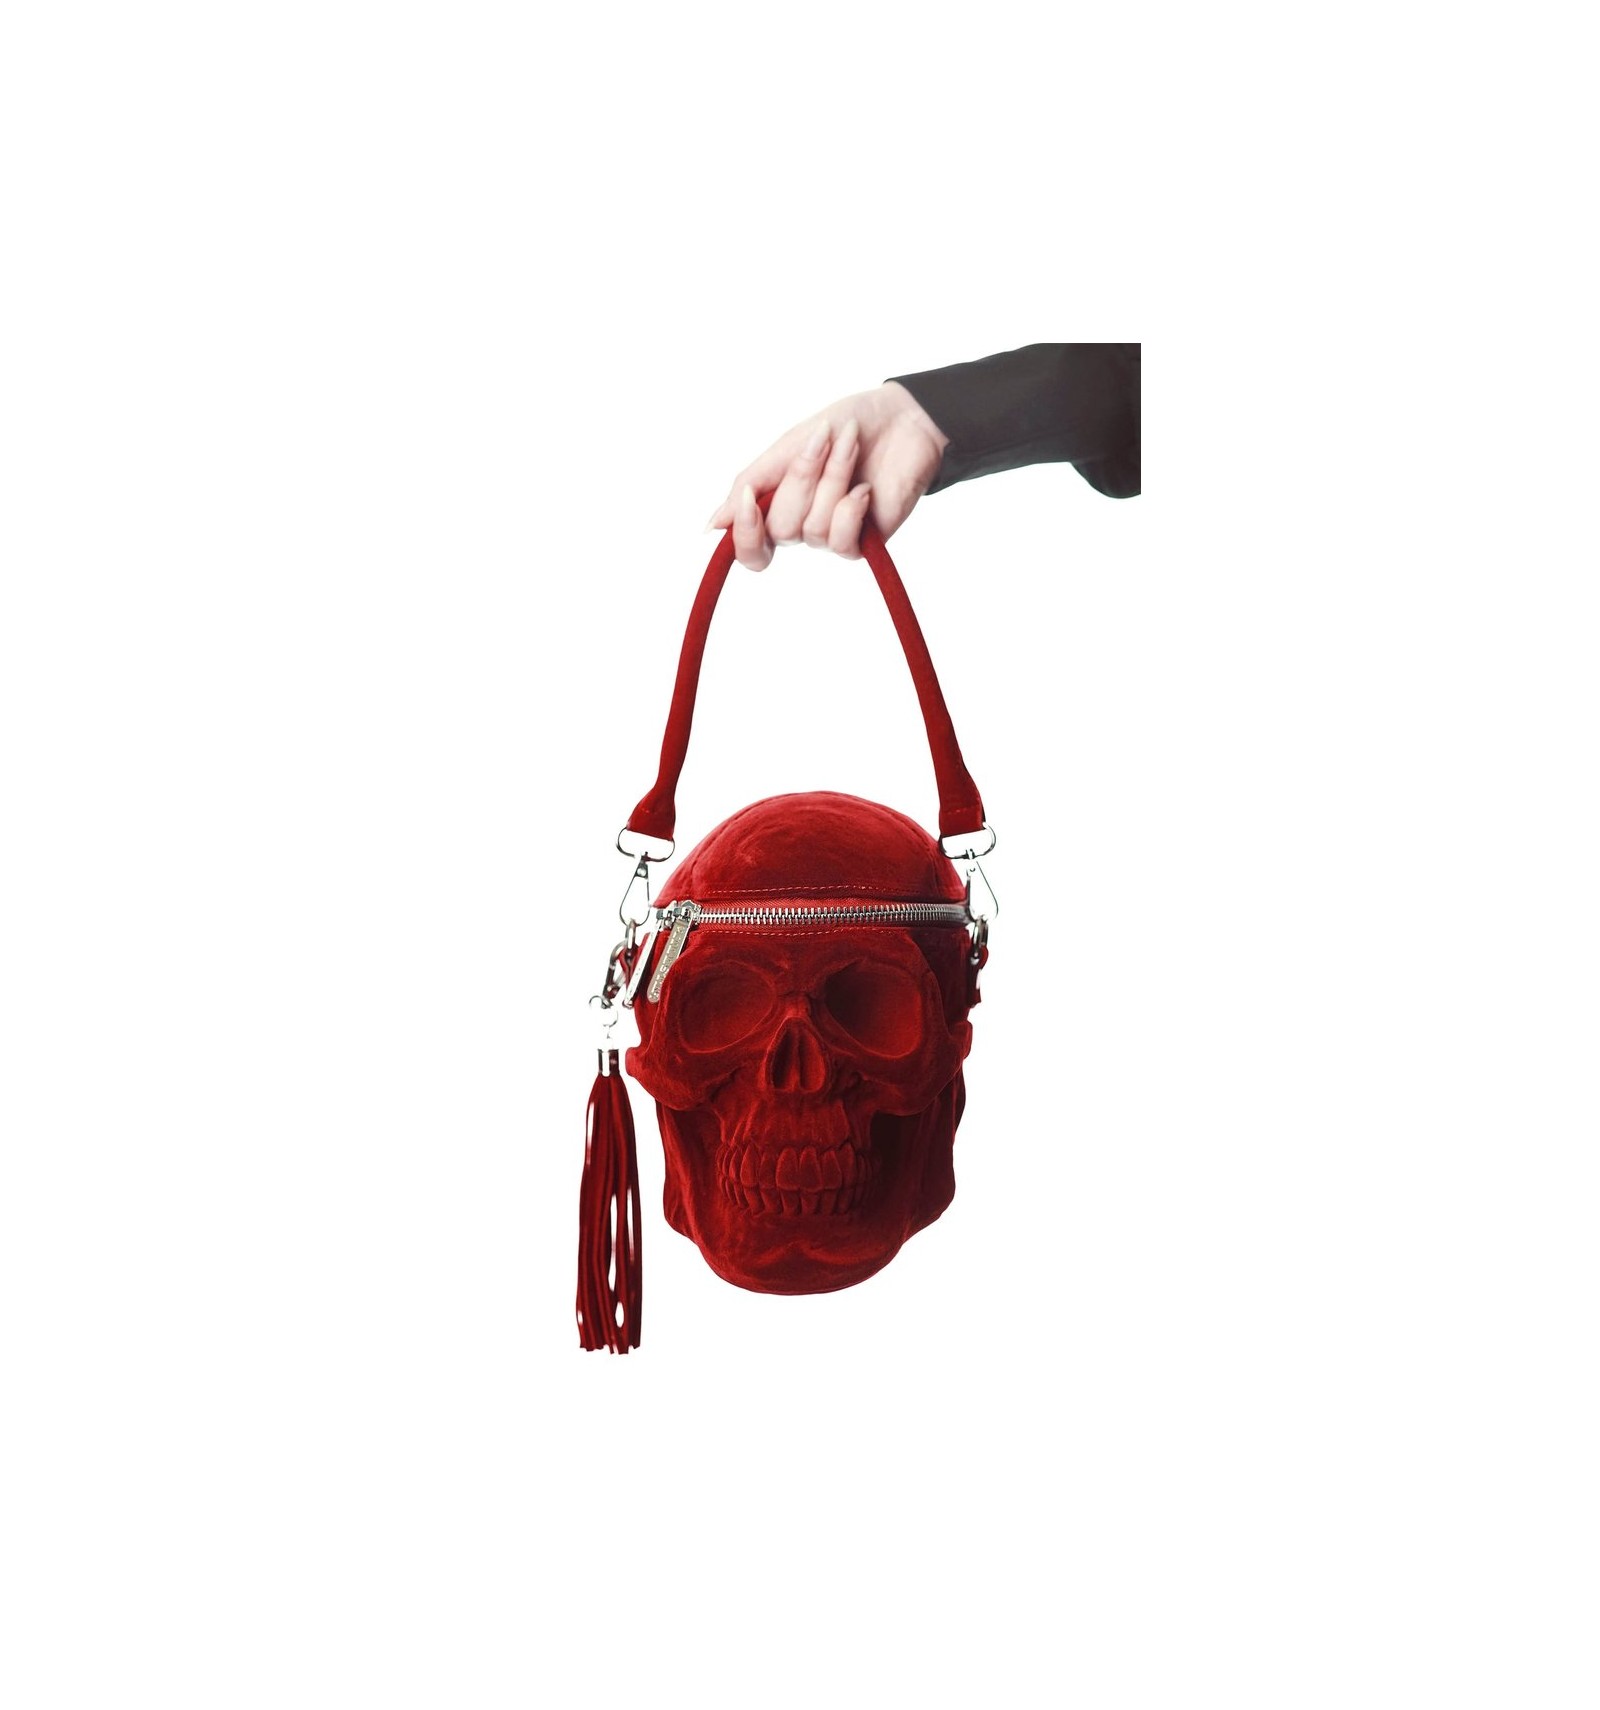 Leather Womens Small Handbags Tote Sugar-skull Print Shoulder Bag Ladies  2pcs/set Purse Handbags for Women 2020 Sac A Main, चमड़ा का टोटे वाला बैग -  ONLY EASY KART, Mansa | ID: 2853142791073